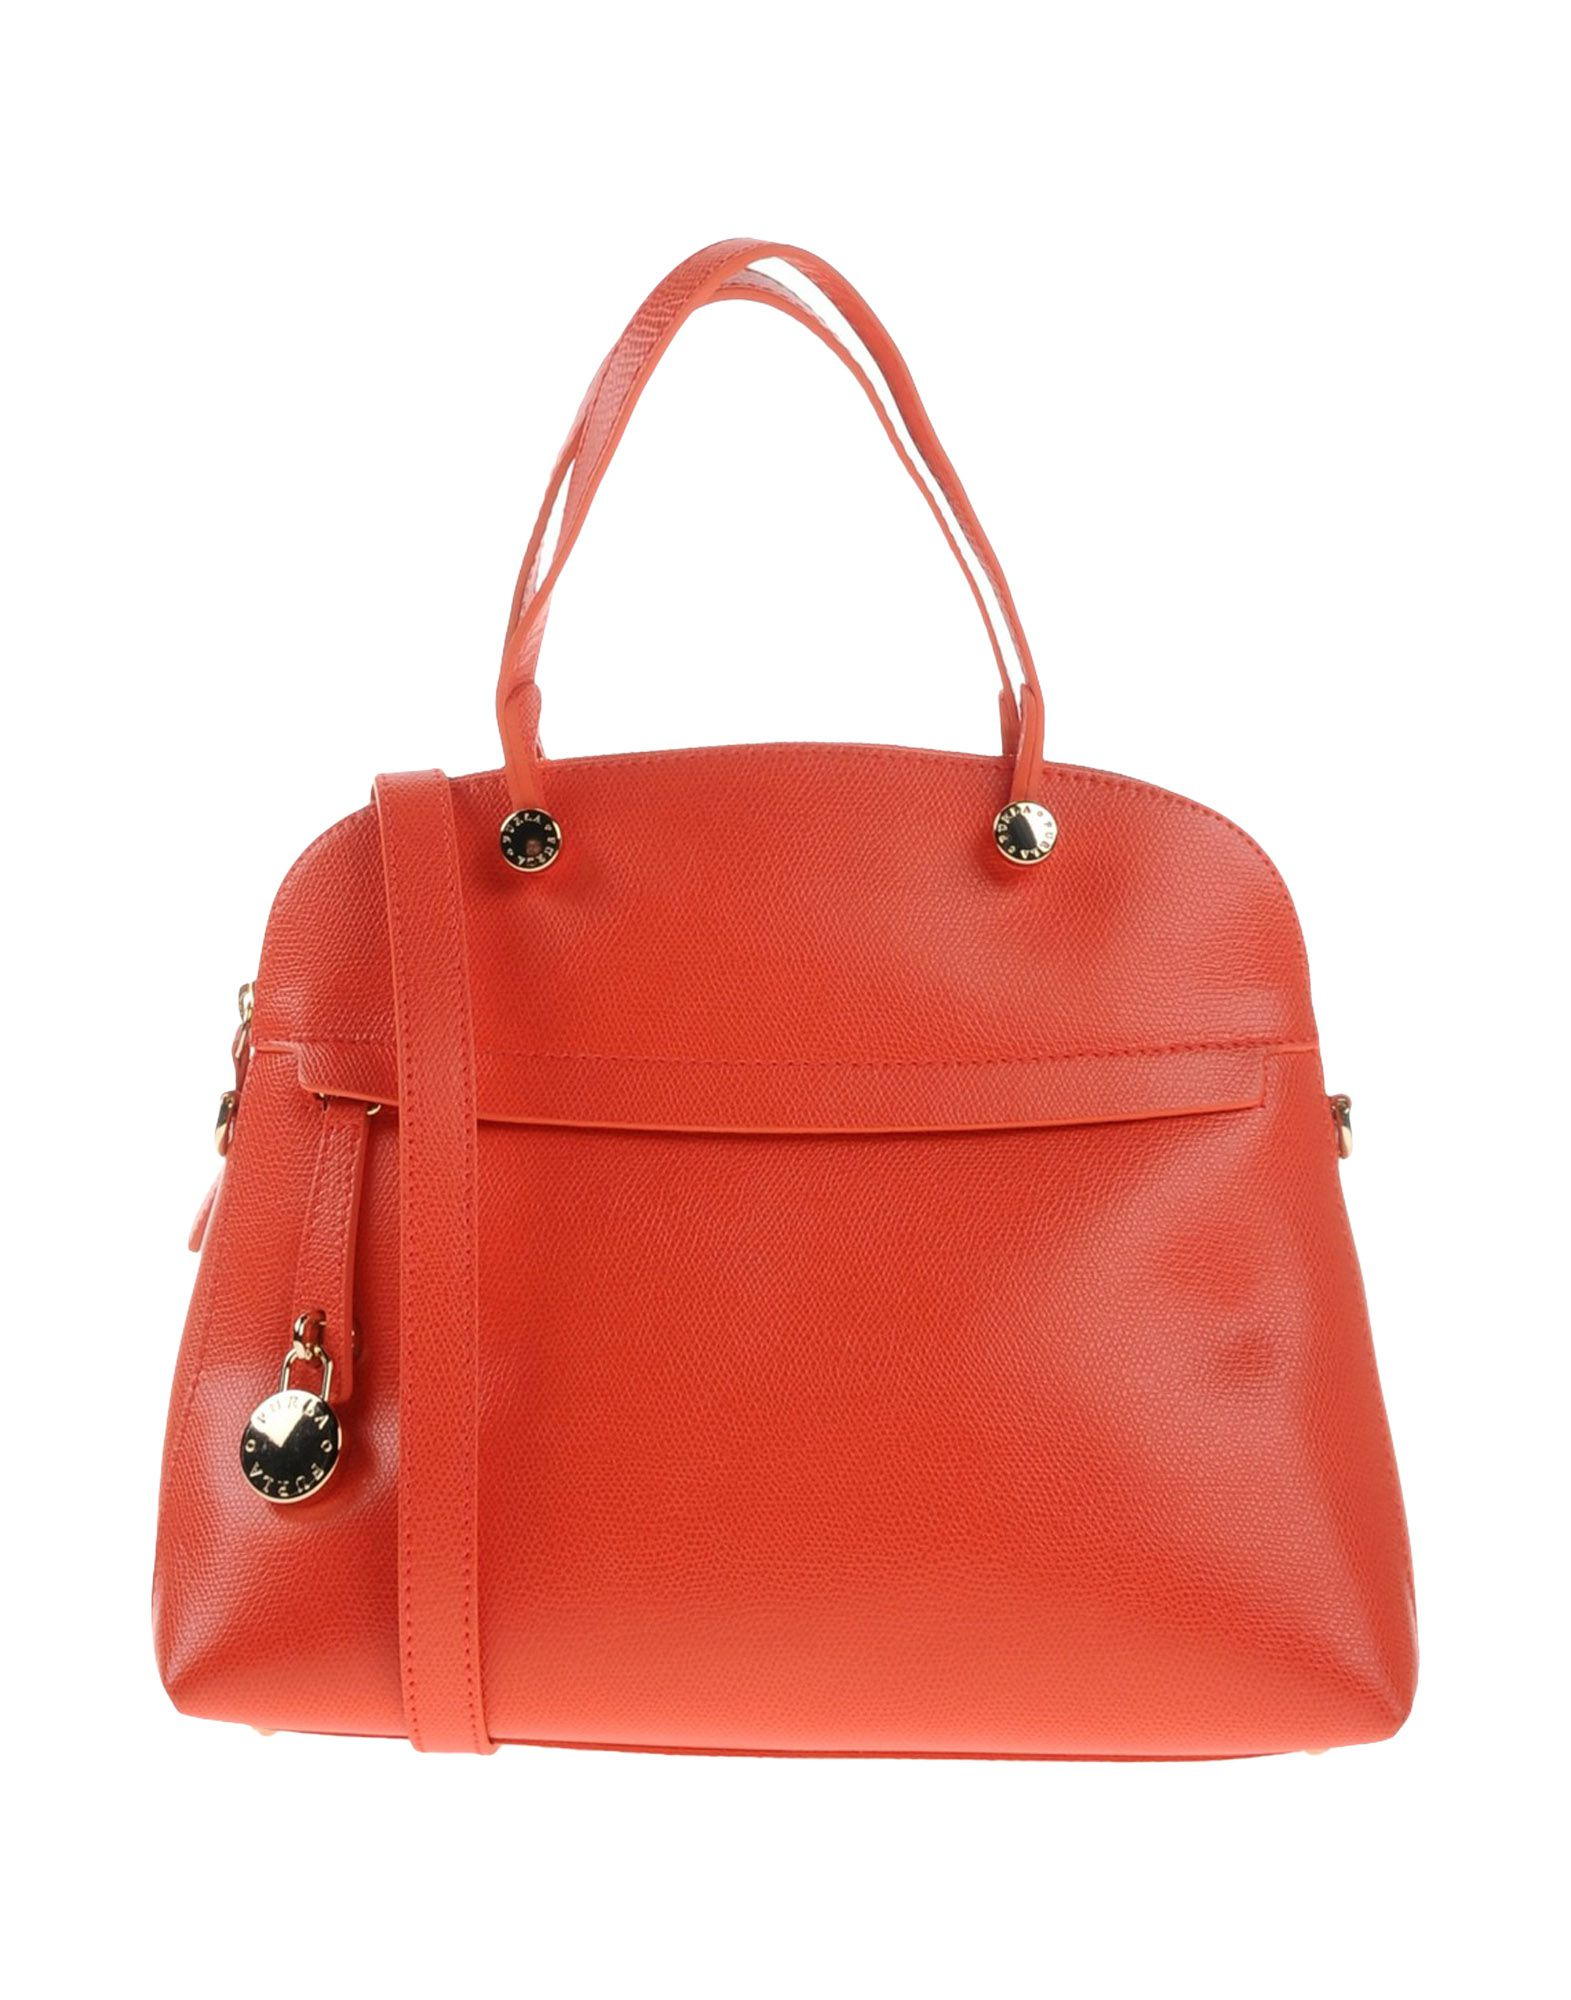 Furla Leather Handbag in Coral (Orange) - Lyst